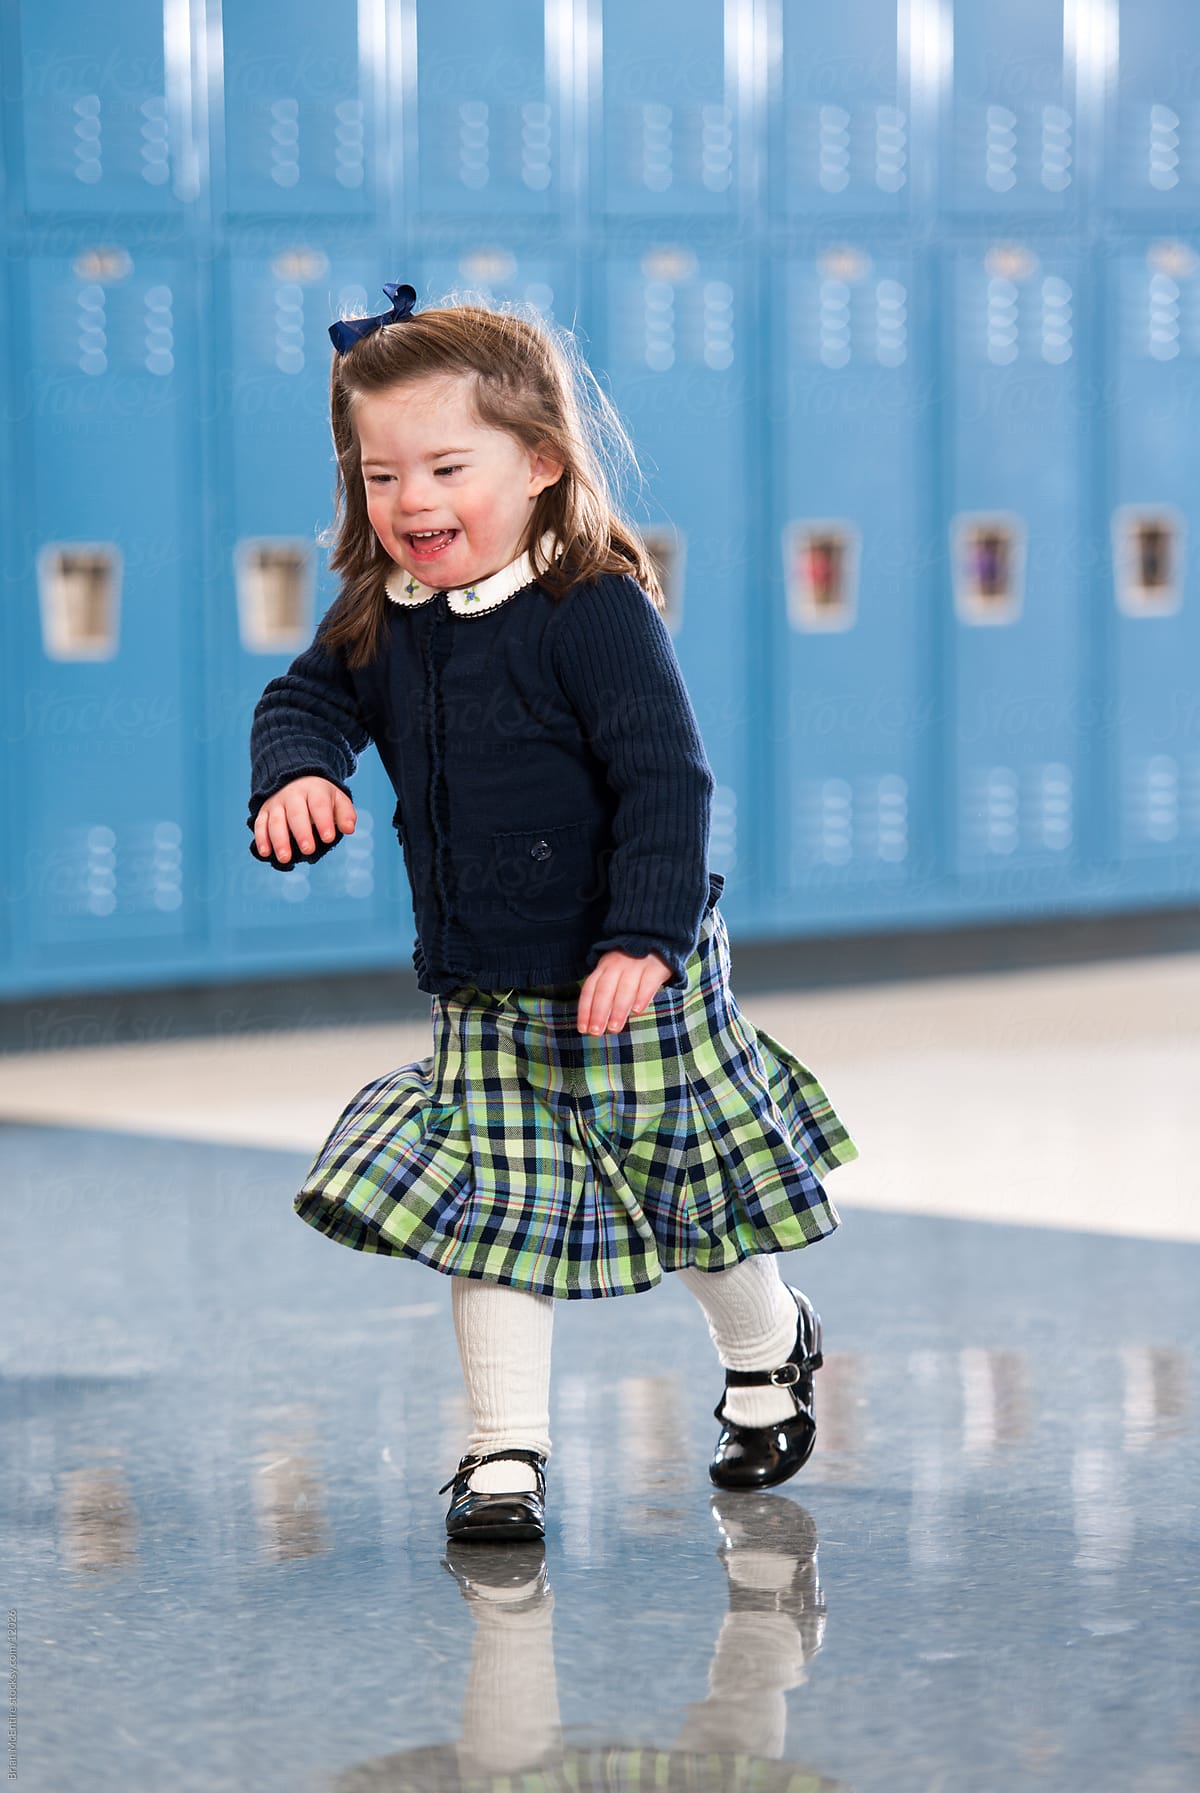 Kindergarten Girl with Down Syndrome Running Through School Halls